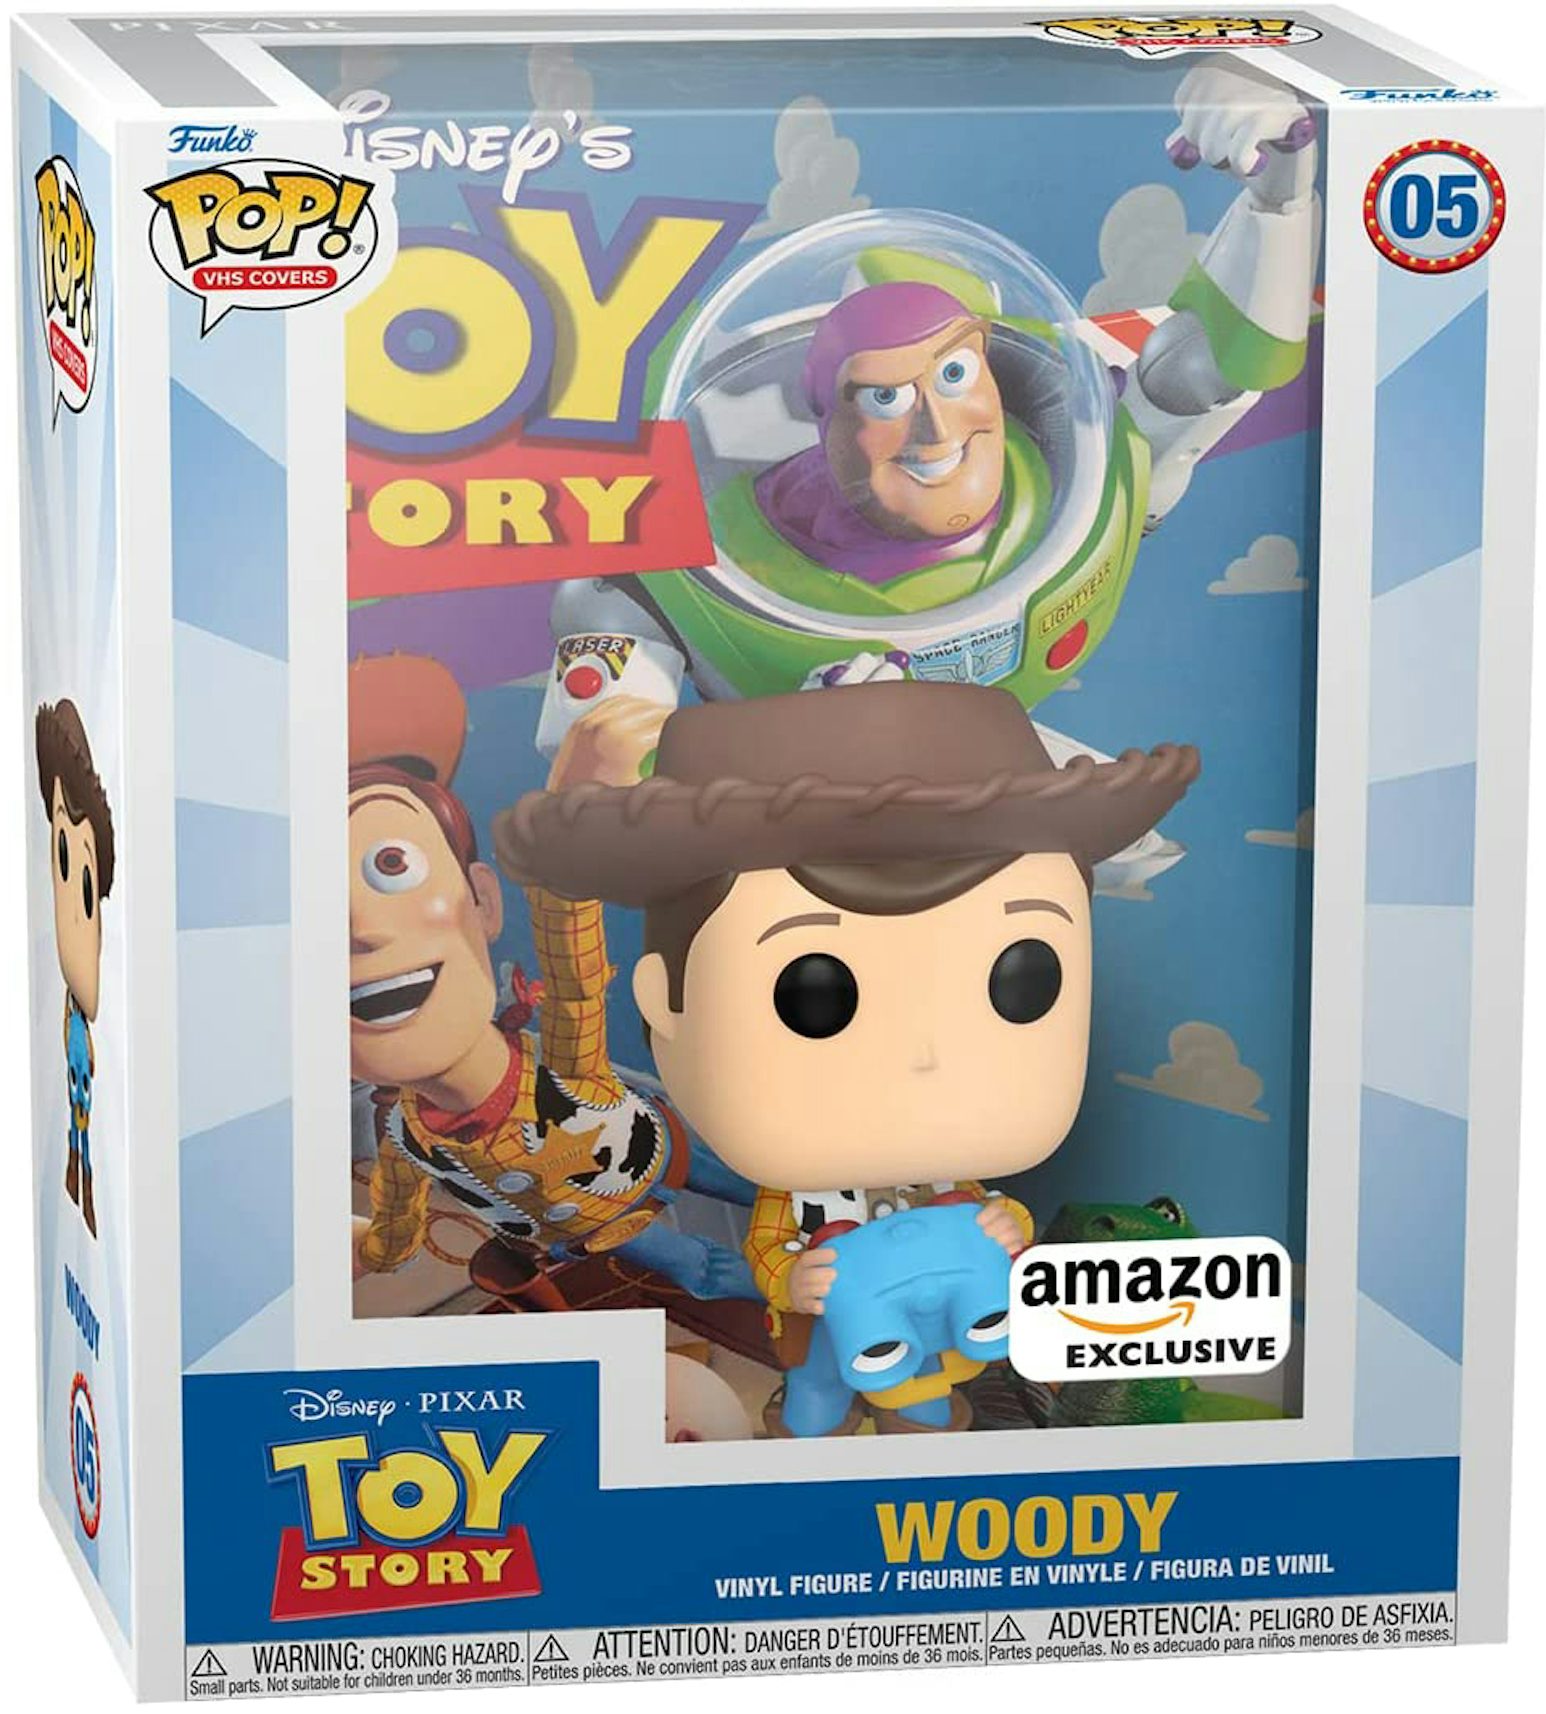 Figurine Jouet Woody Disney Pixar Toy Story Neuf